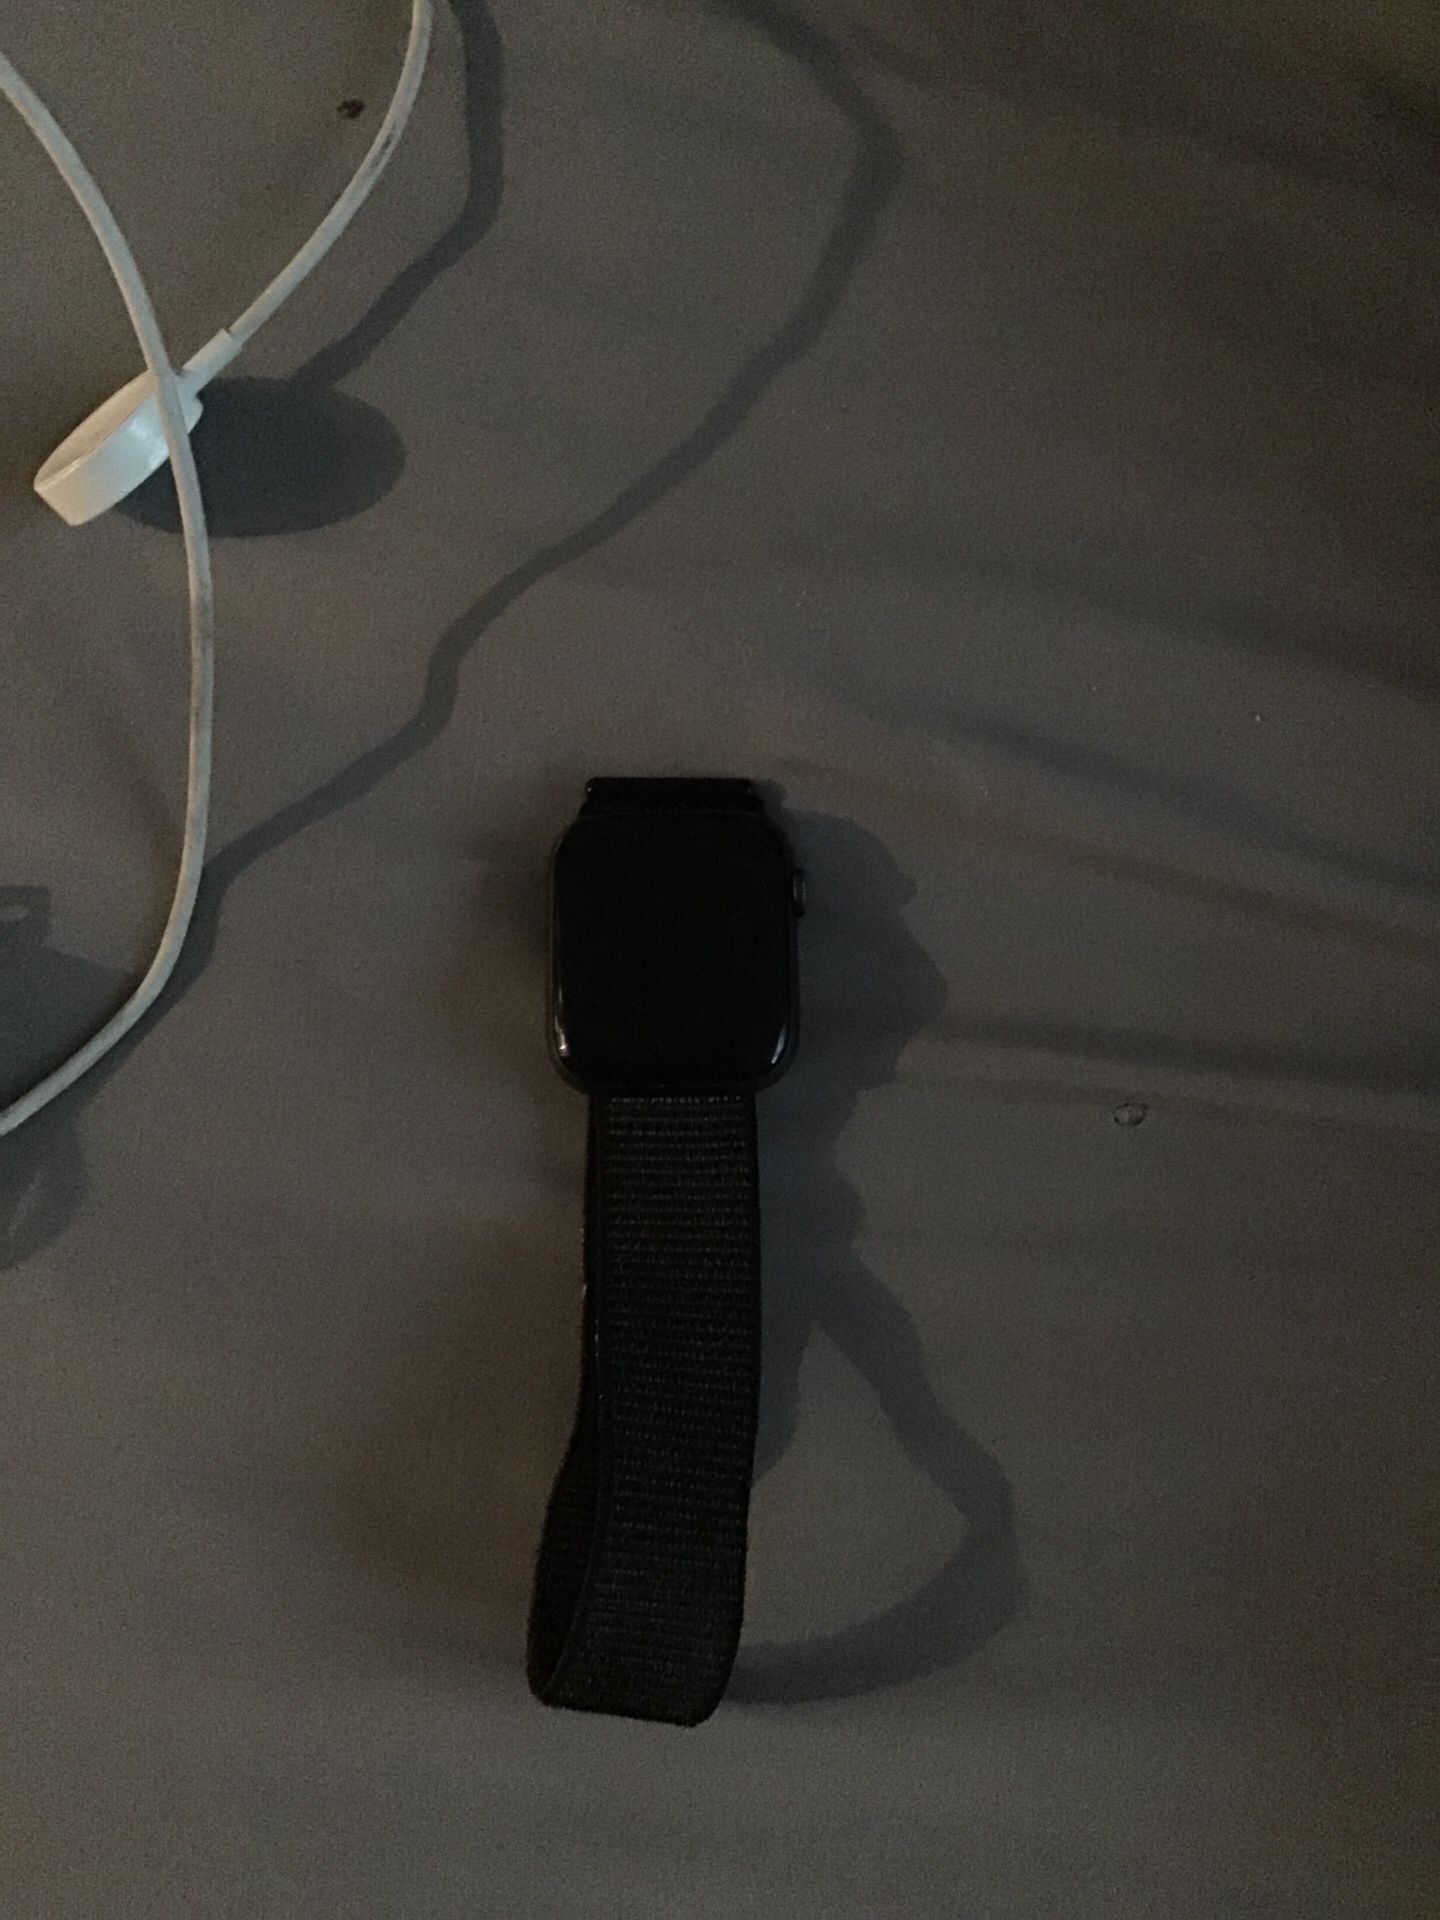 Apple Watch Serious 4 42mm Unlocked